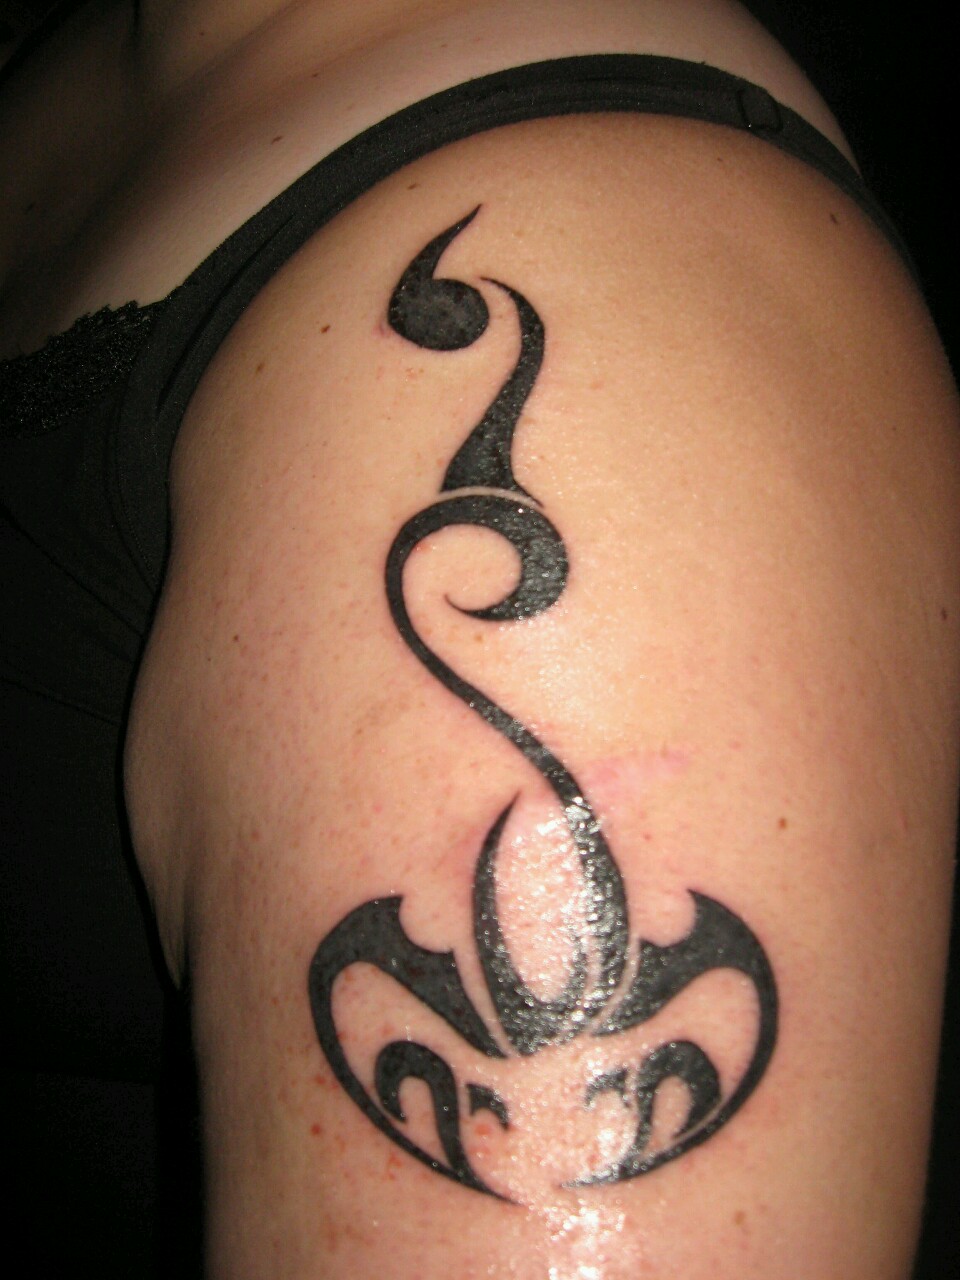 scorpio sign tattoo with stars